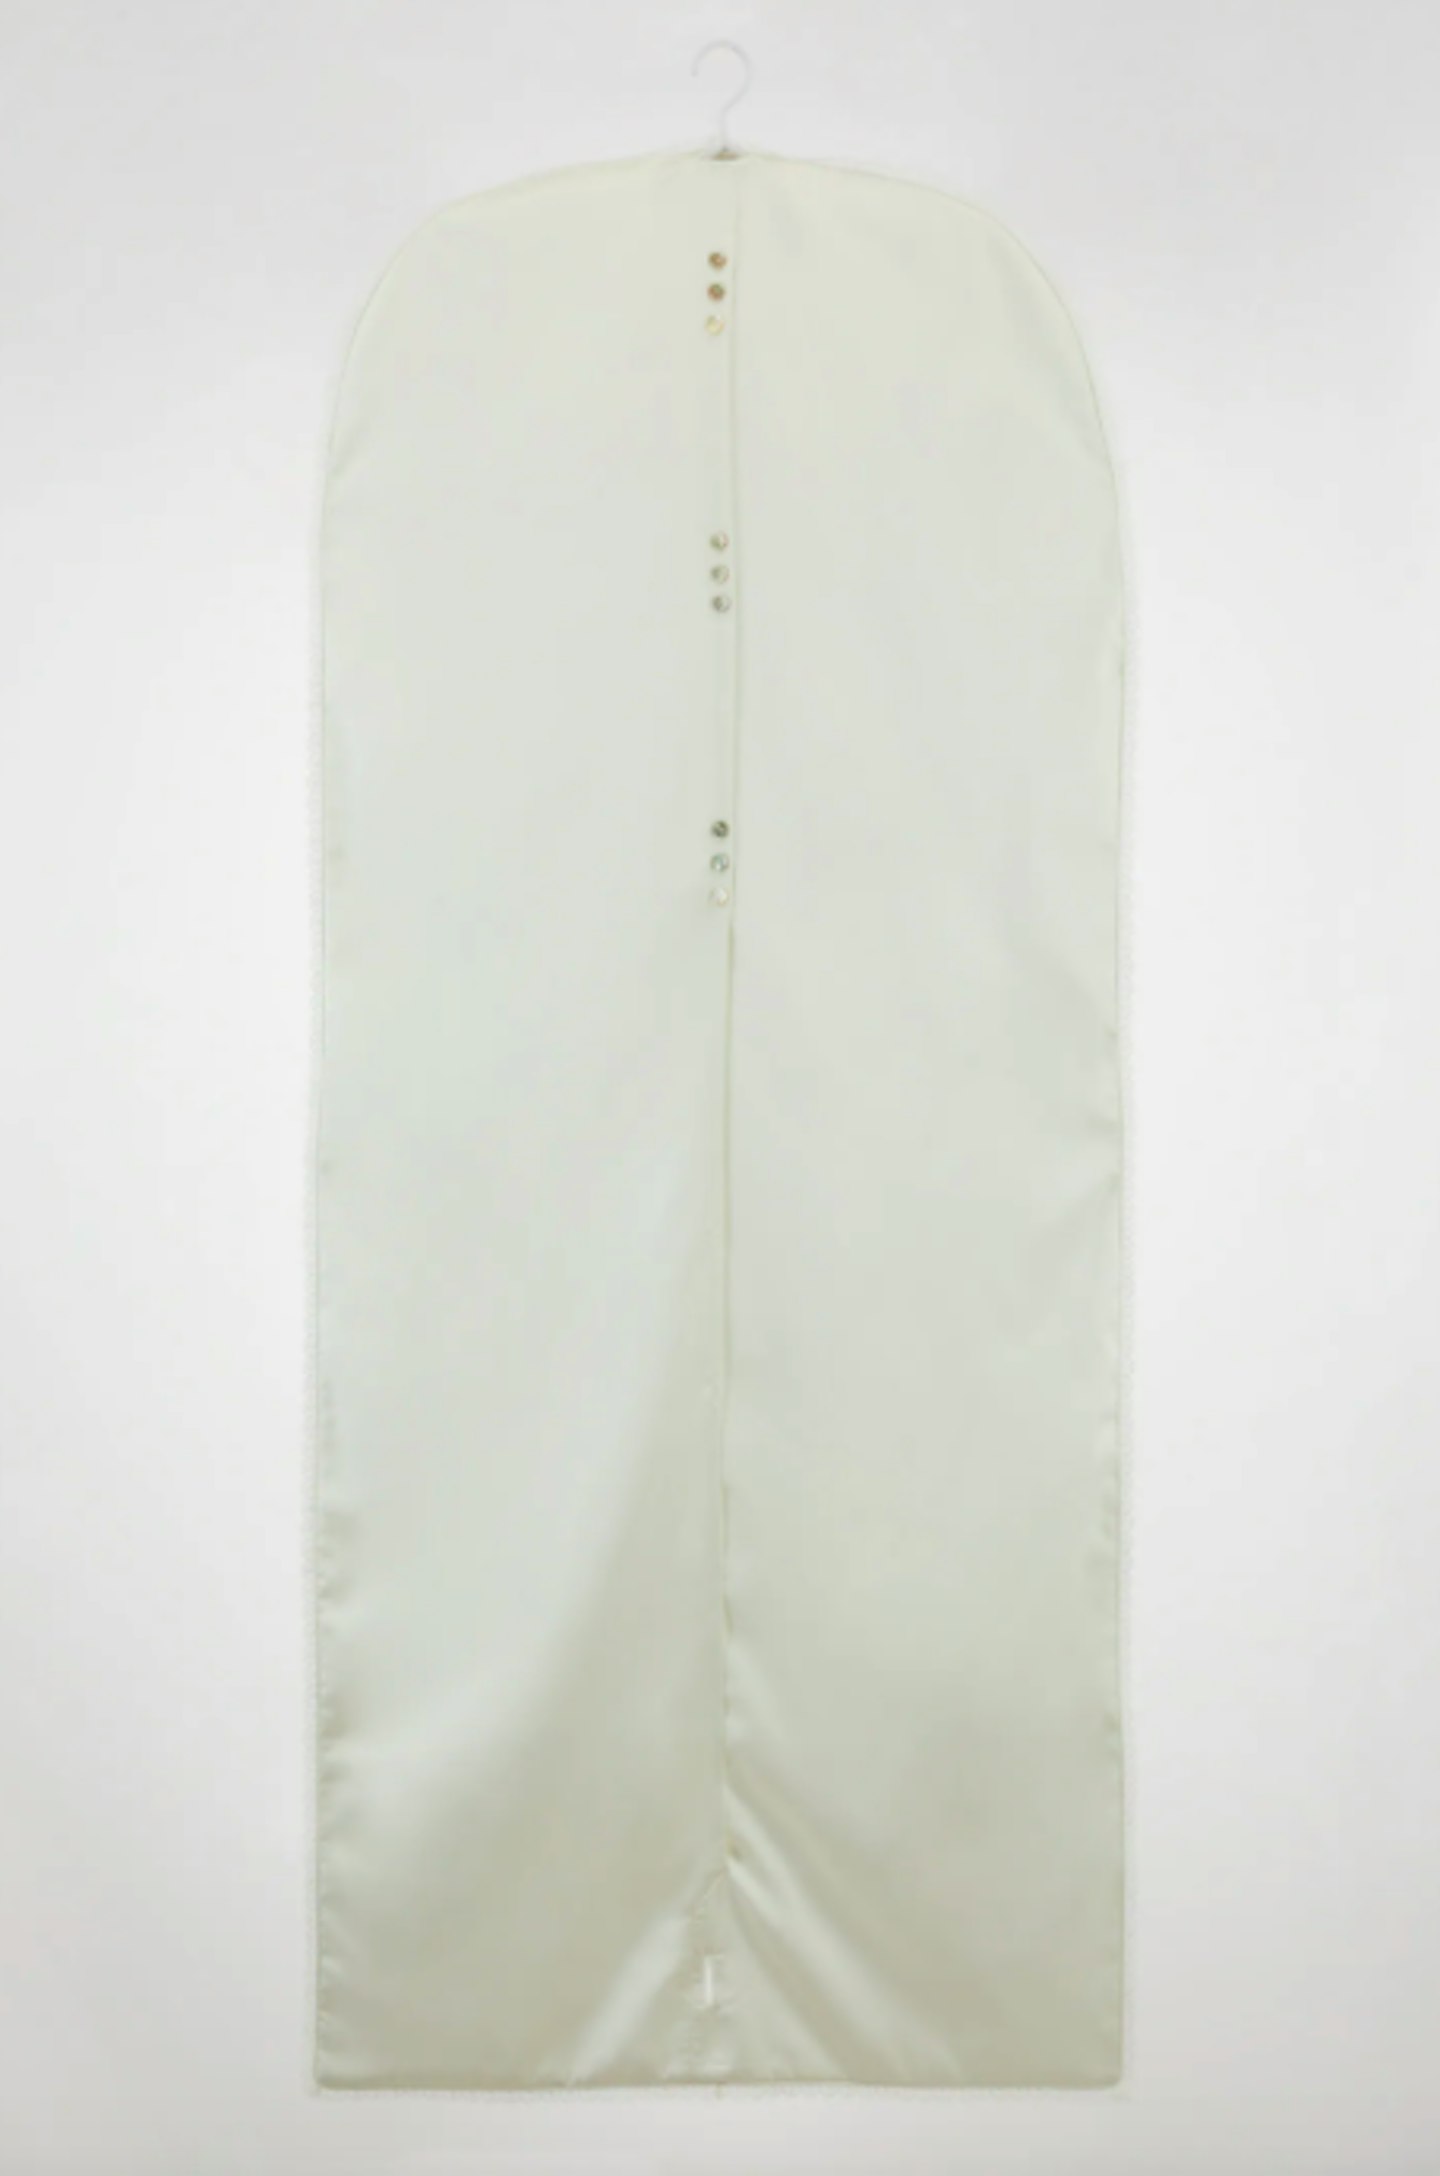 Zara, Satin Customisable Garment Bag, £49.99